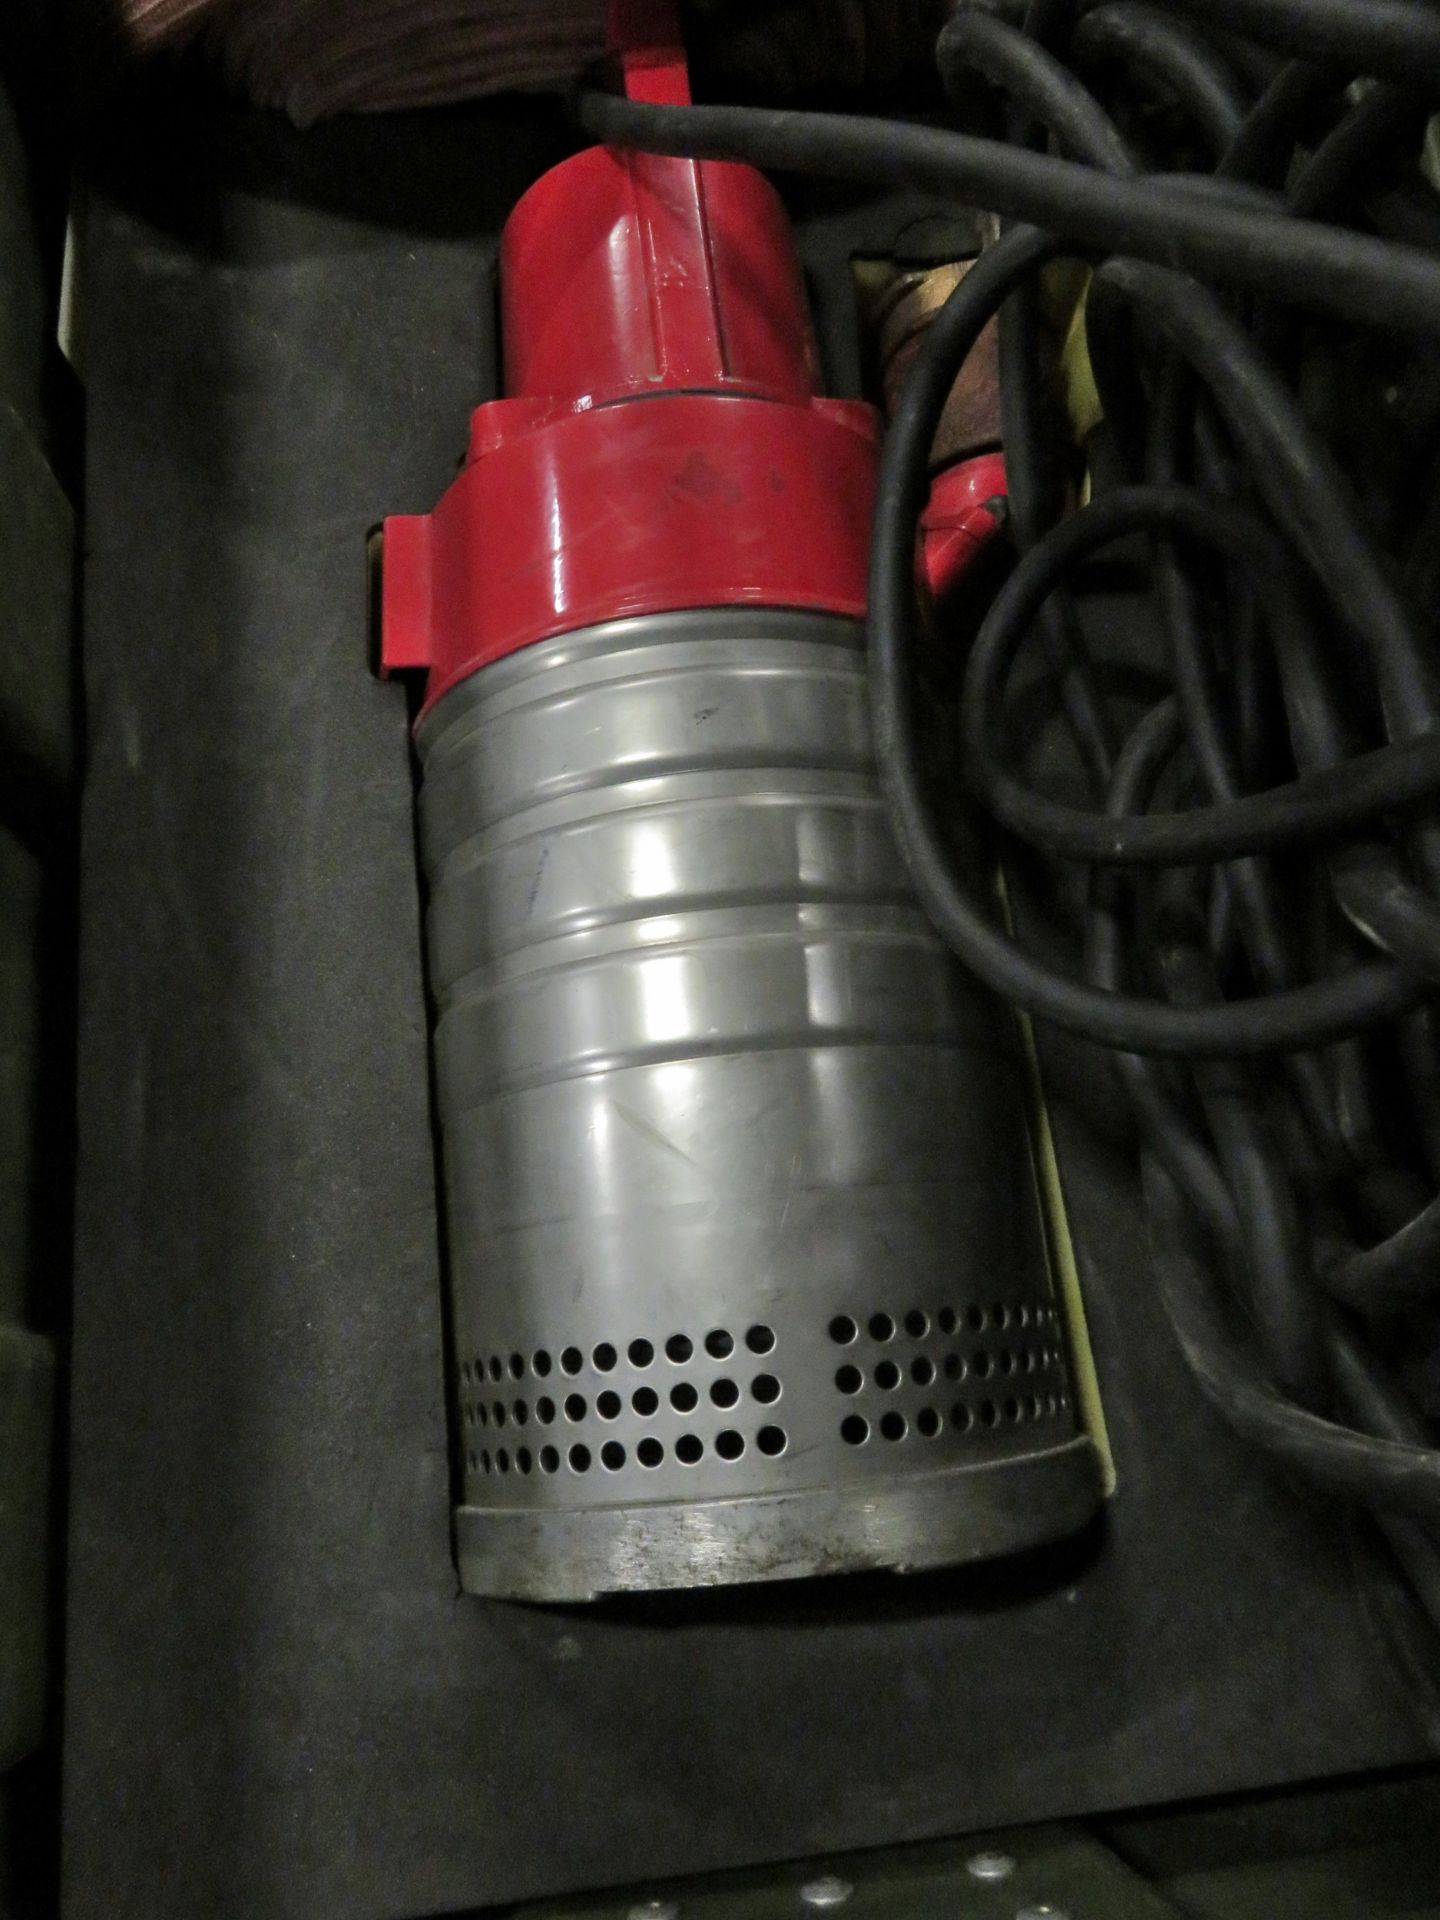 Grindex Minex Type G1005 Submersible Pump Hose 110v In a Case - Image 2 of 3